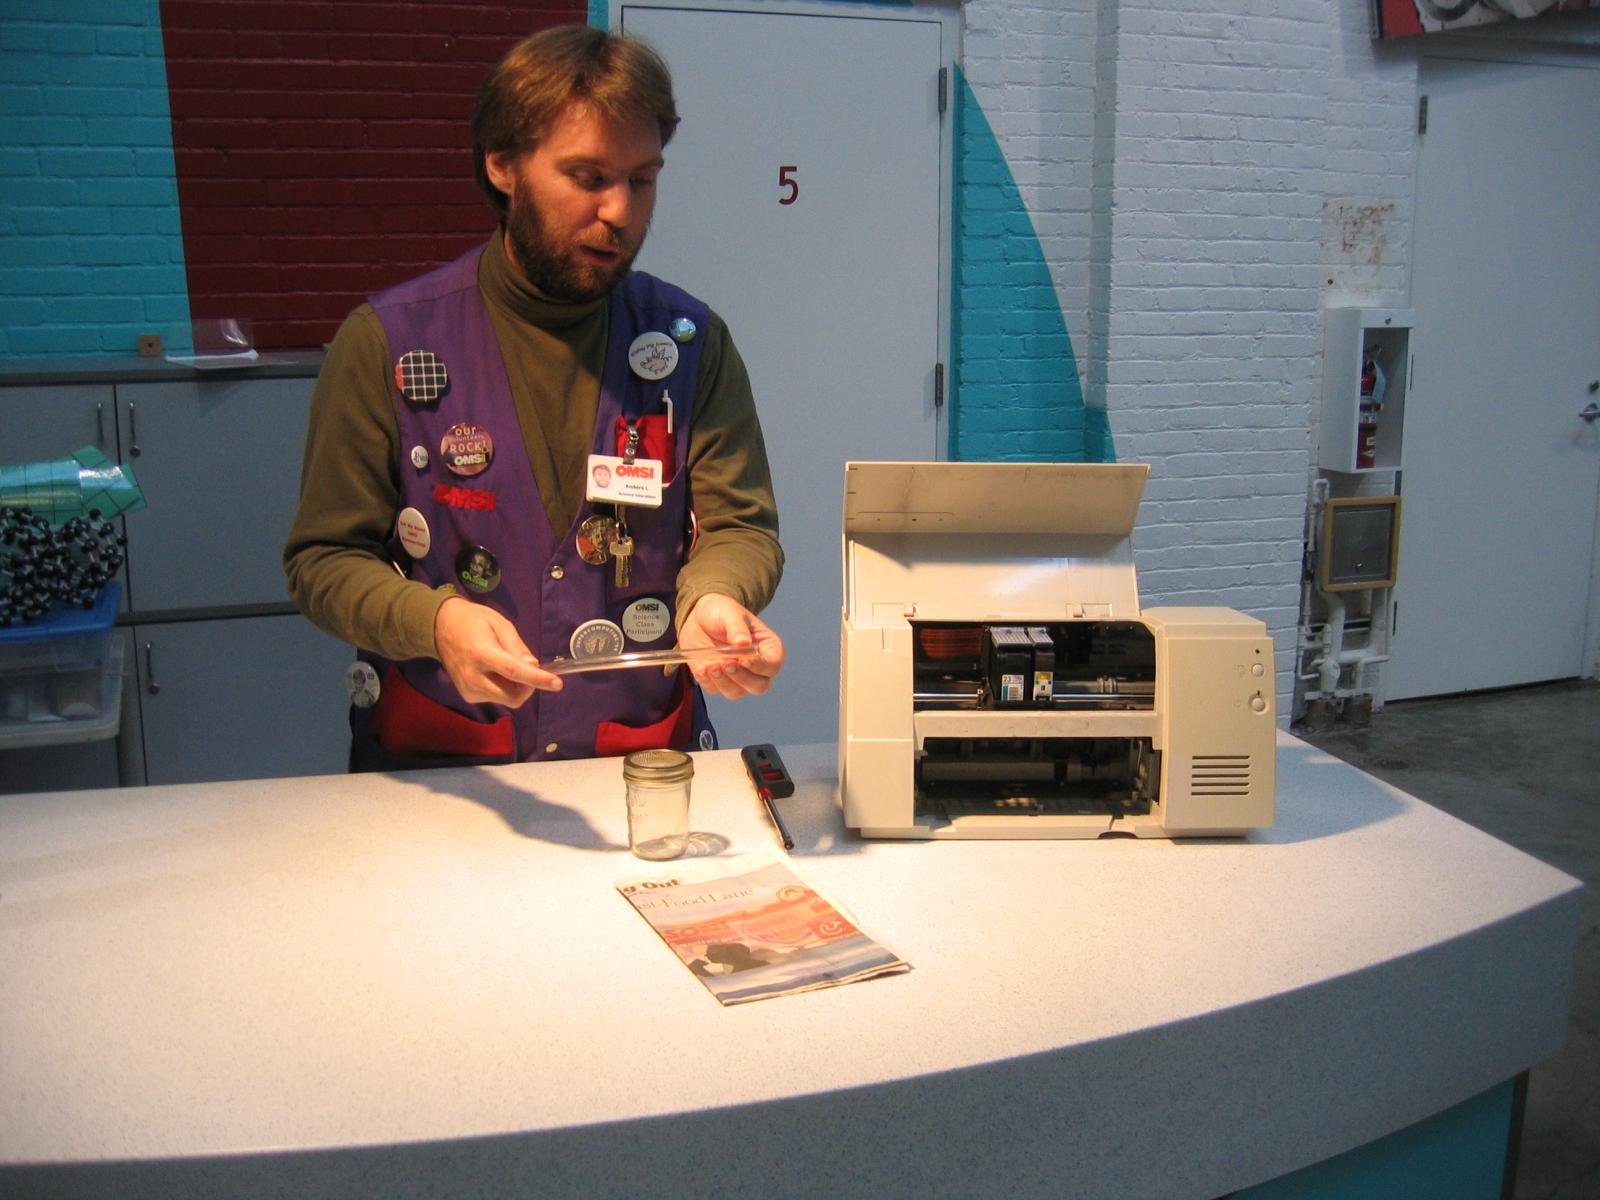 Facilitator demonstrates how an inkjet printer works